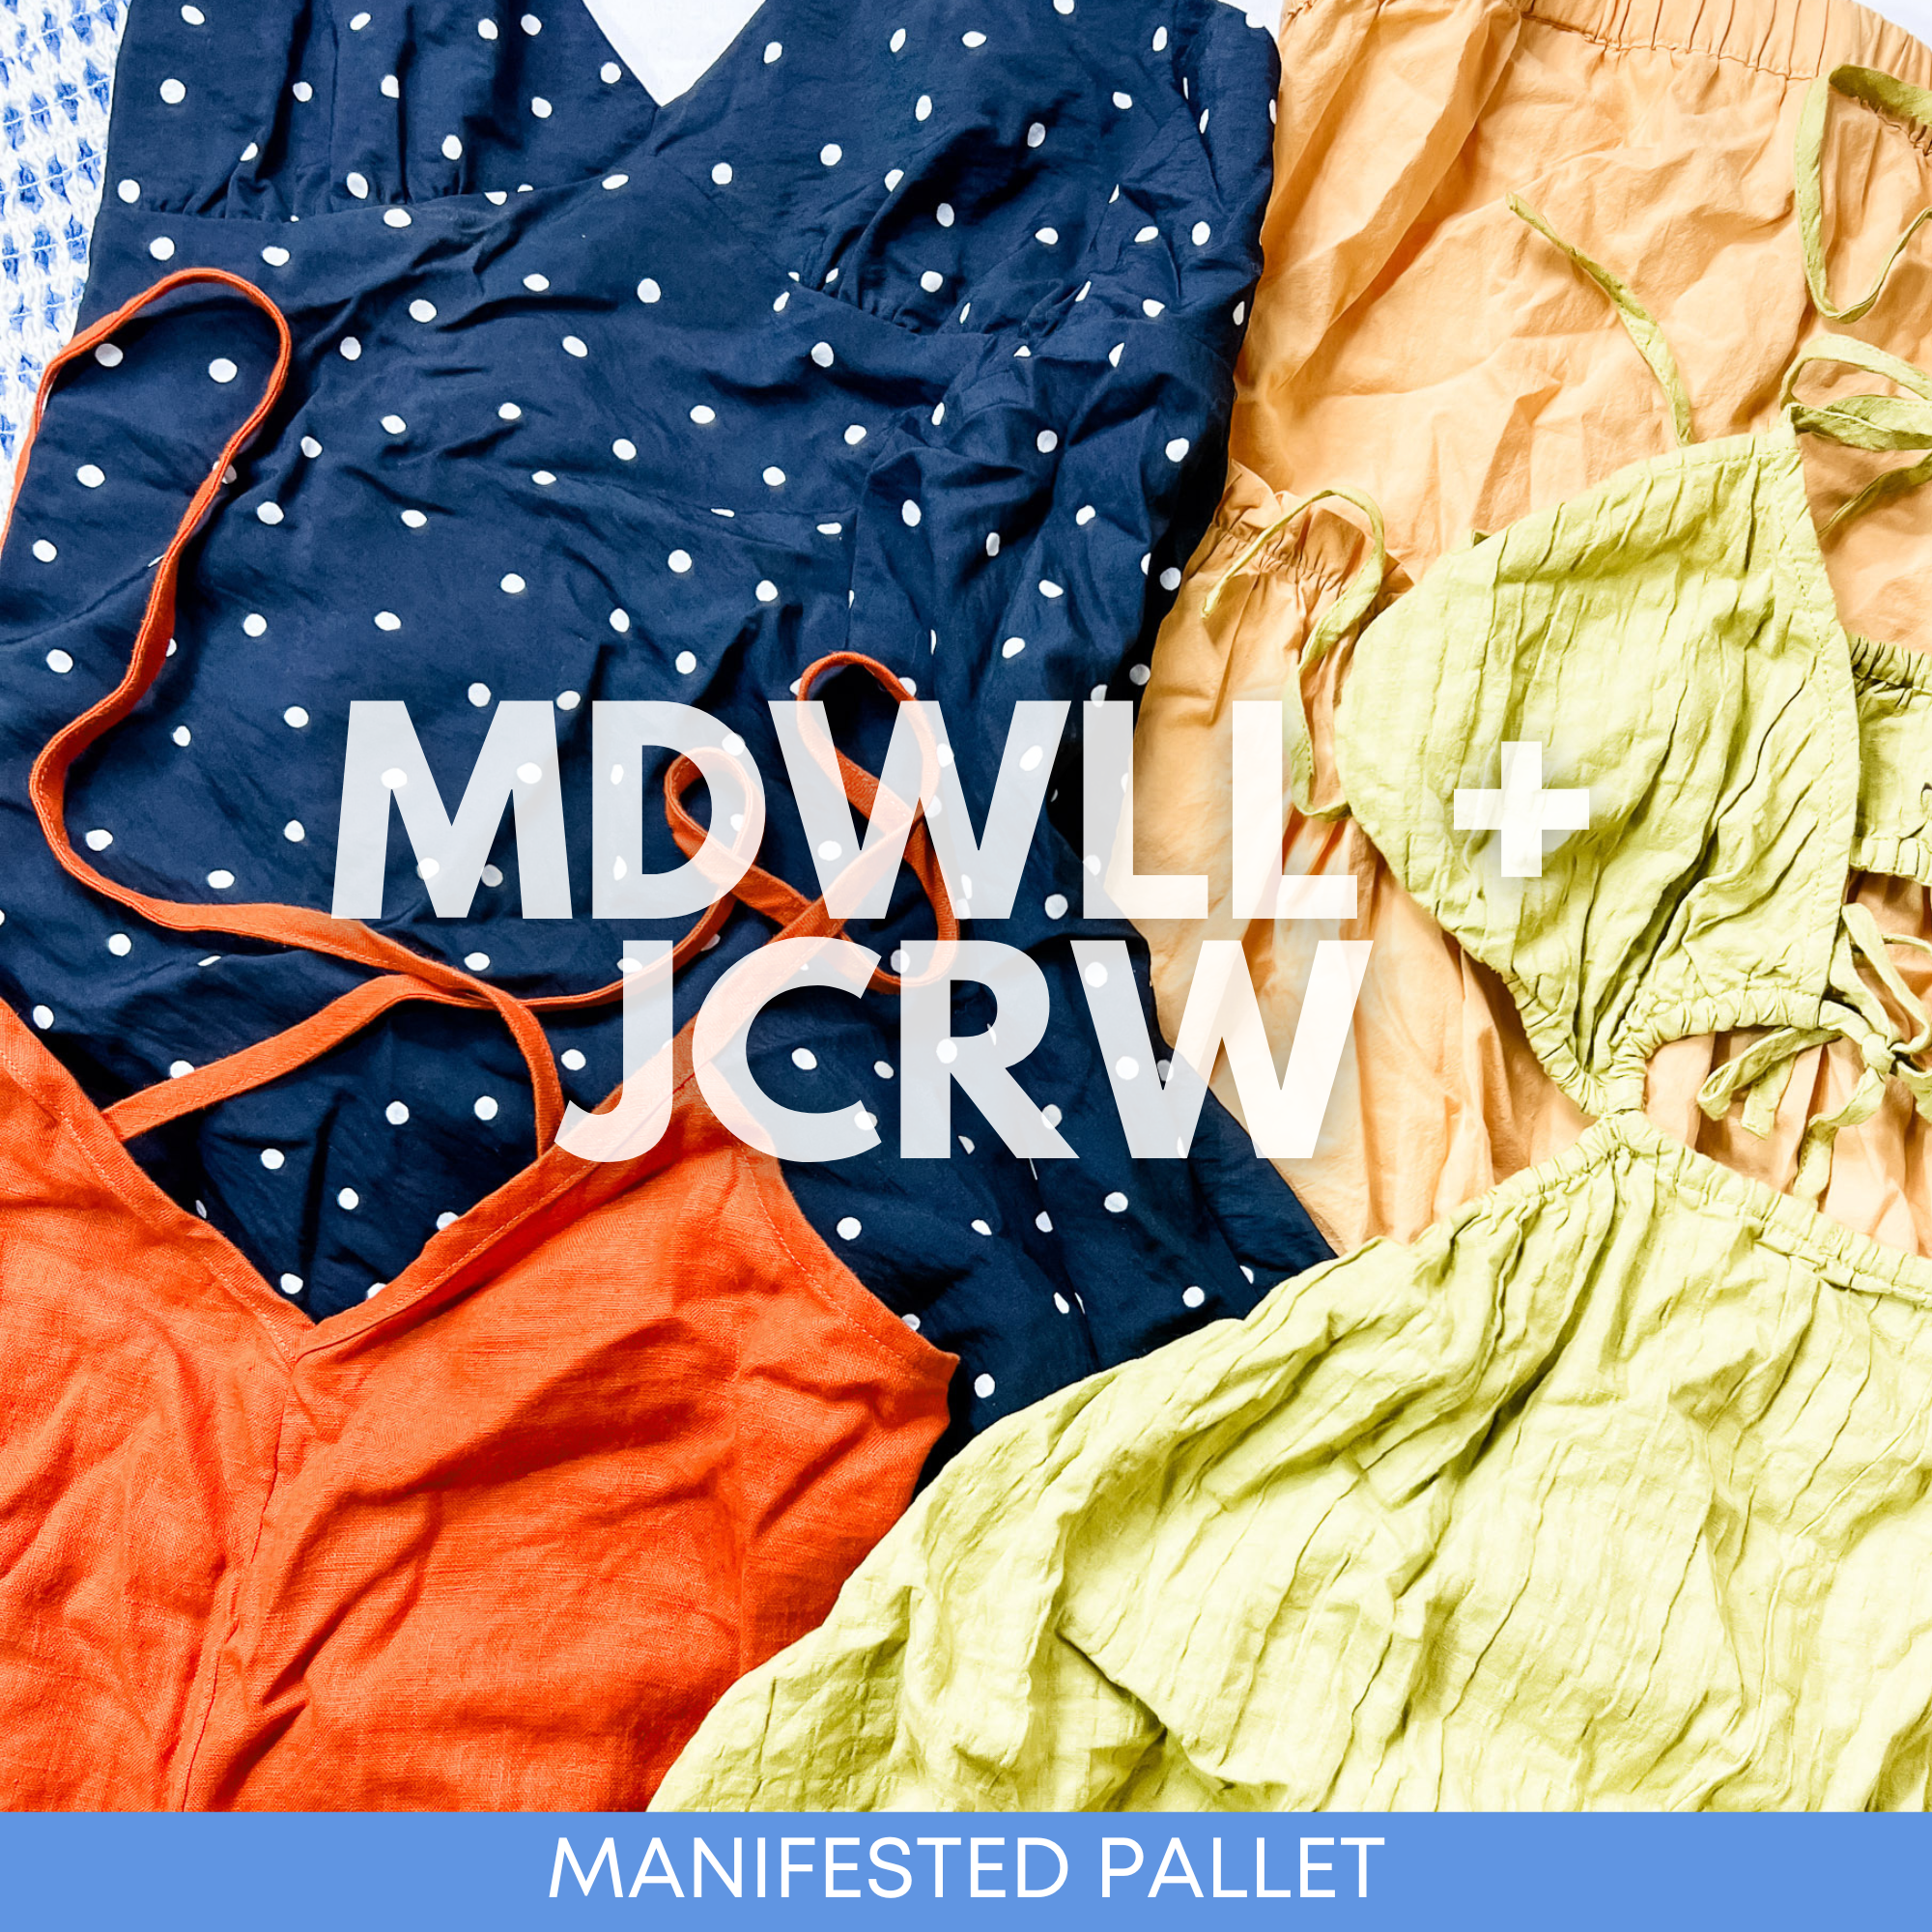 MDWLL + JCRW Assorted Variety New / Returns Manifested Pallet #2